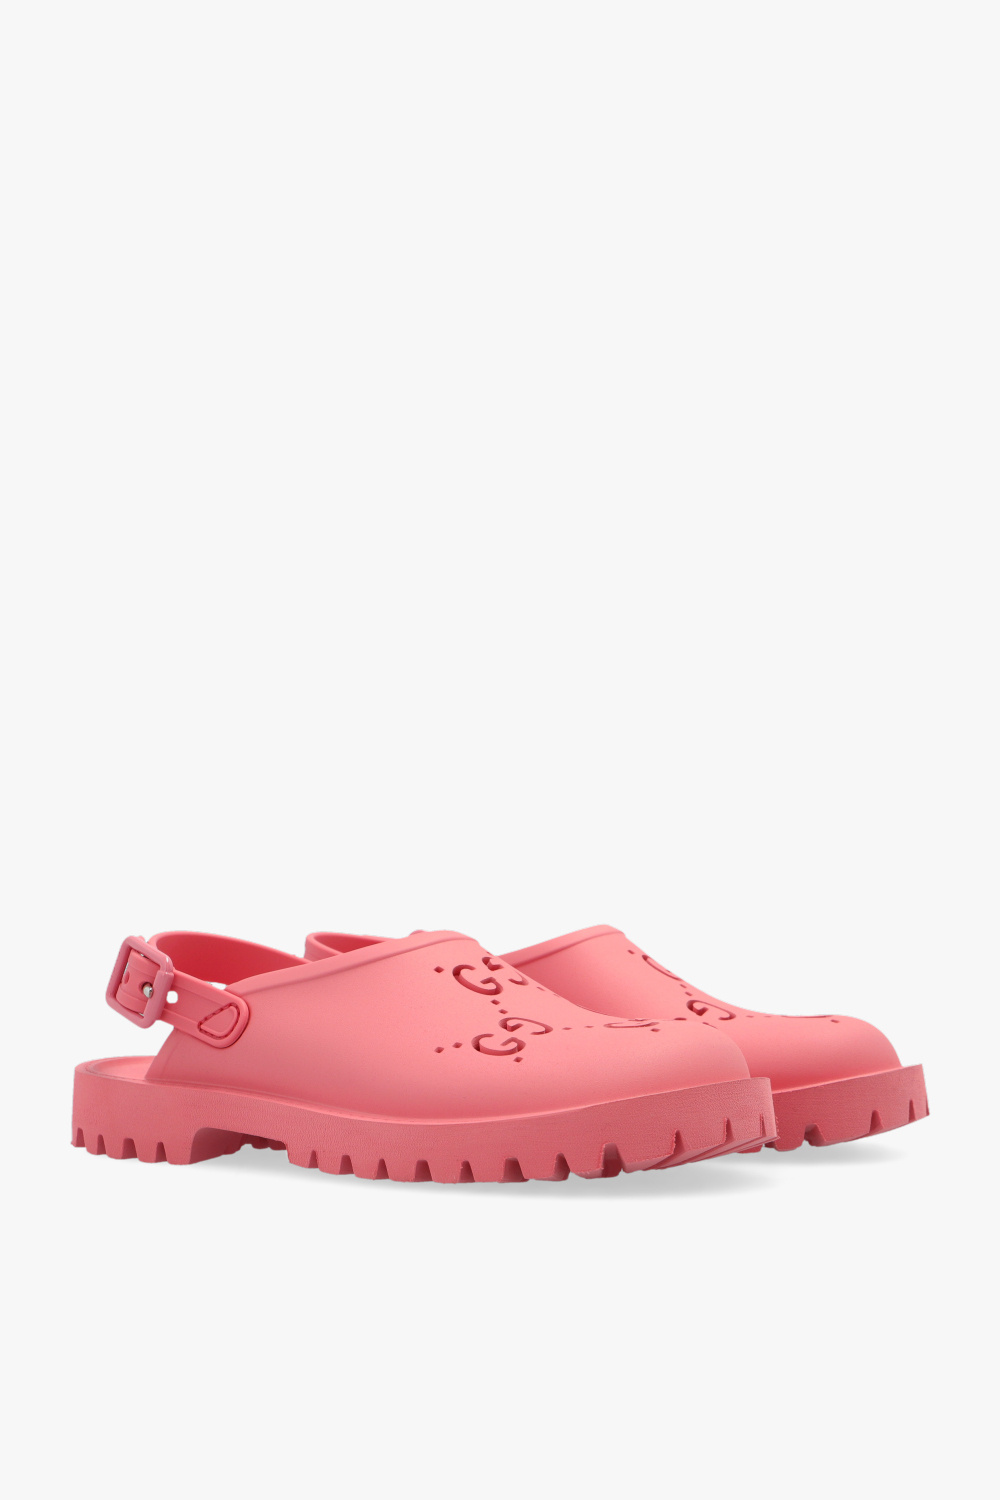 Gucci Kids Love sandals